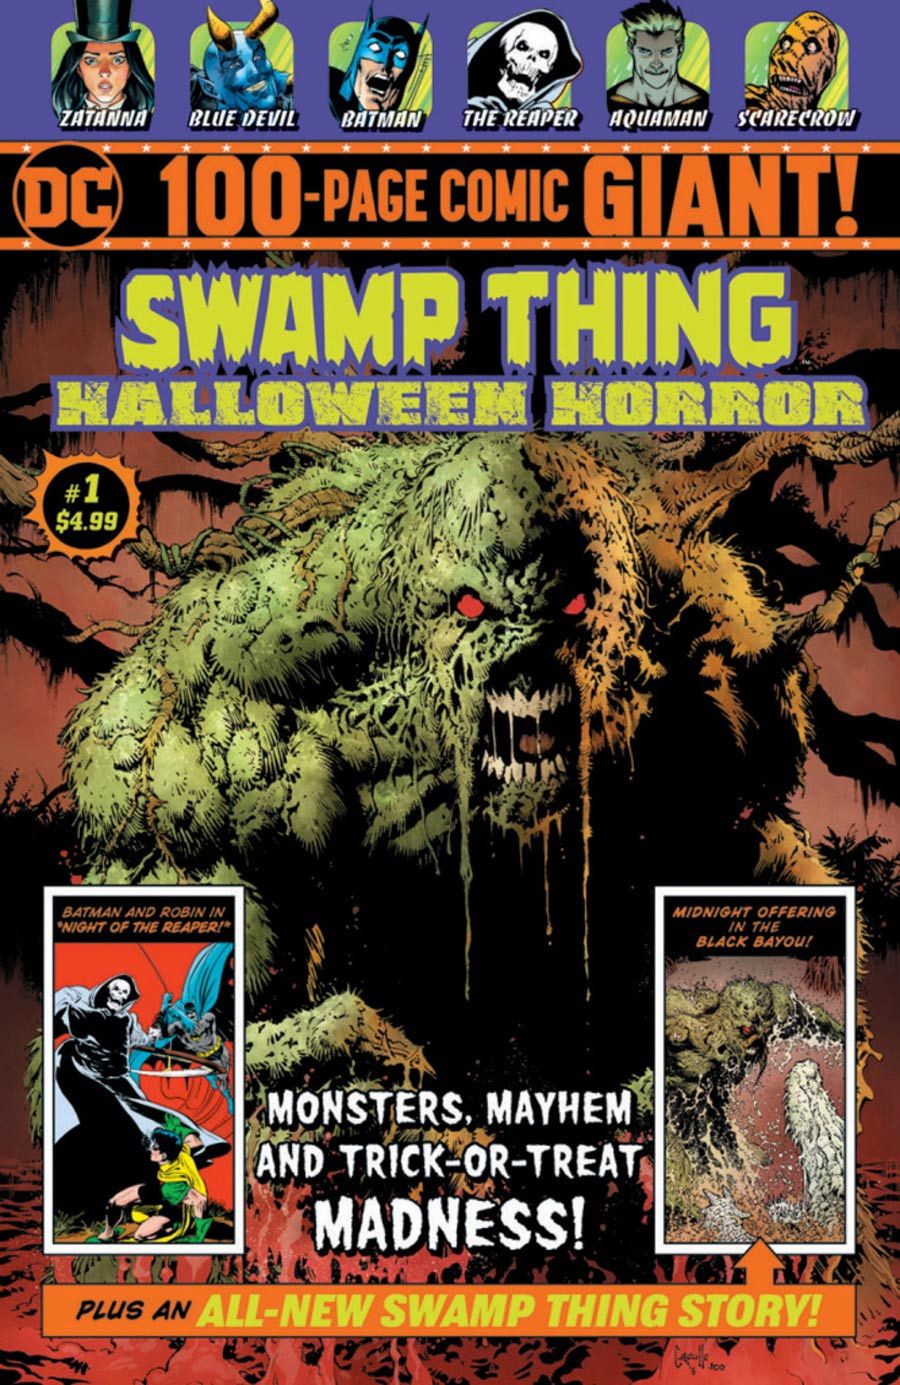 Swamp Thing Halloween Horror #1 Comic